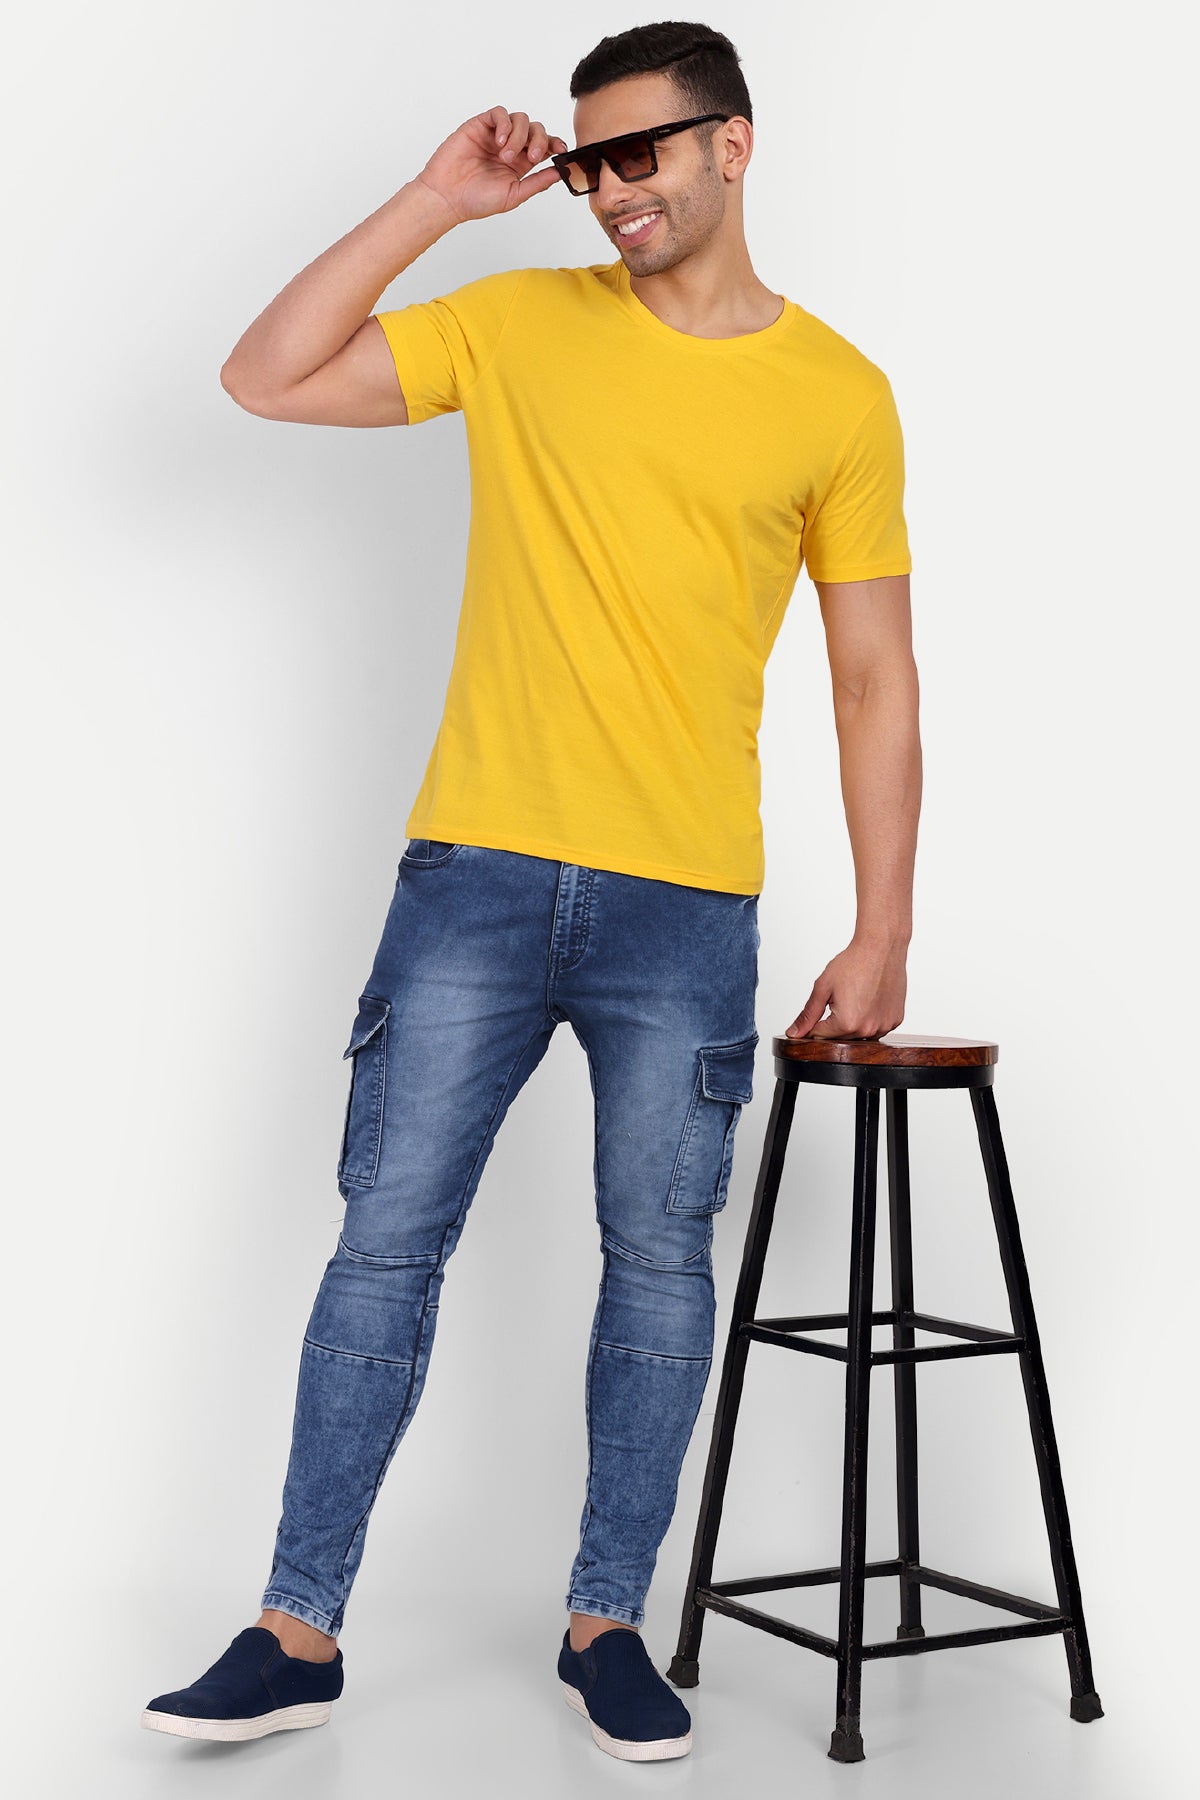 Yellow Double Pocket Denim Shirt, Jean Shirt, Men Jeans Shirt, मेन डेनिम  शर्ट - kwiqdrop, Palakkad | ID: 24290526833